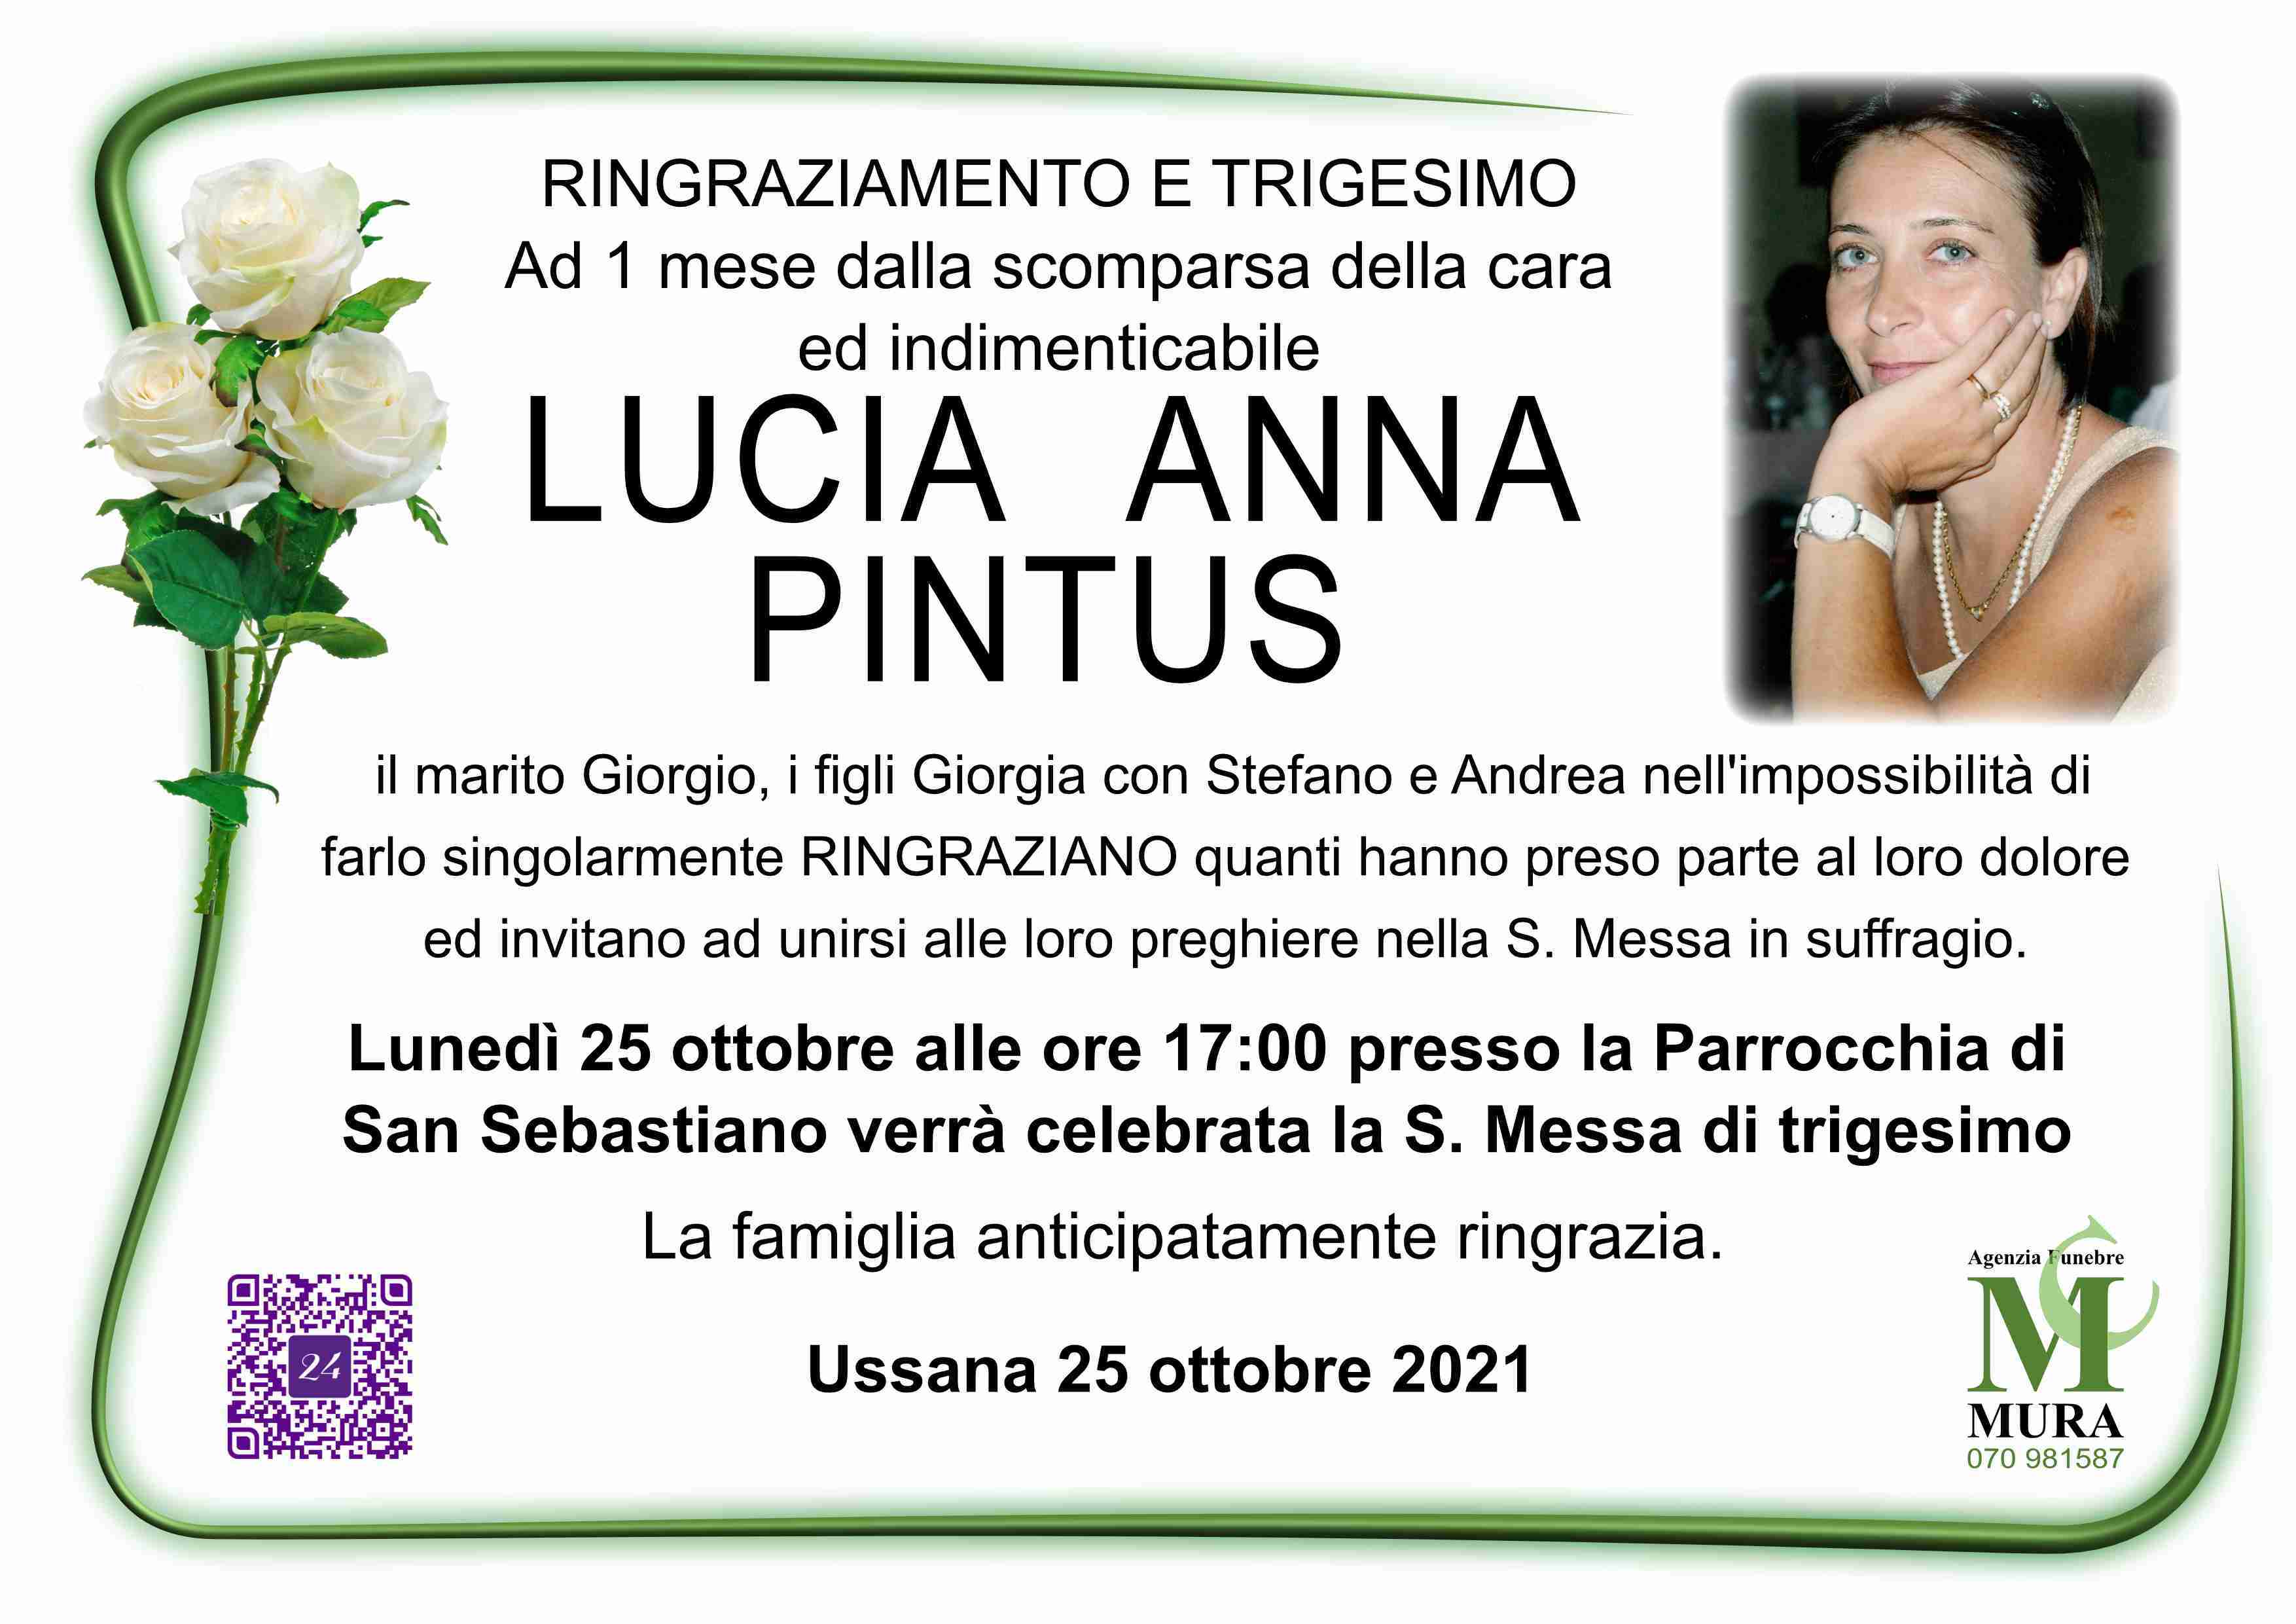 Lucia Anna Pintus